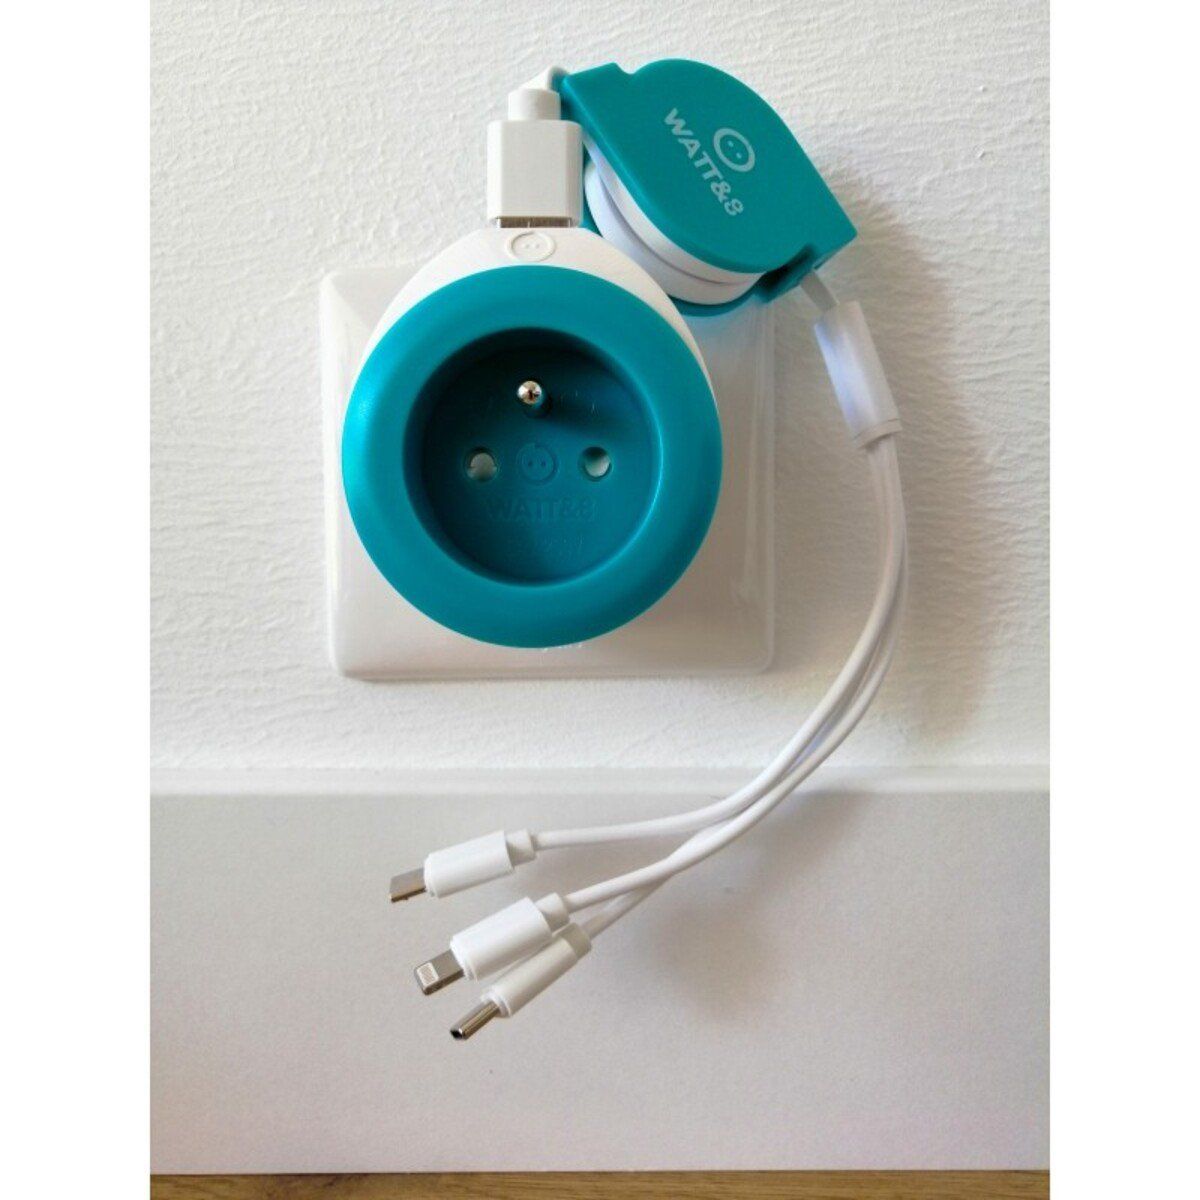 Prise 16A avec chargeur USB turquoise